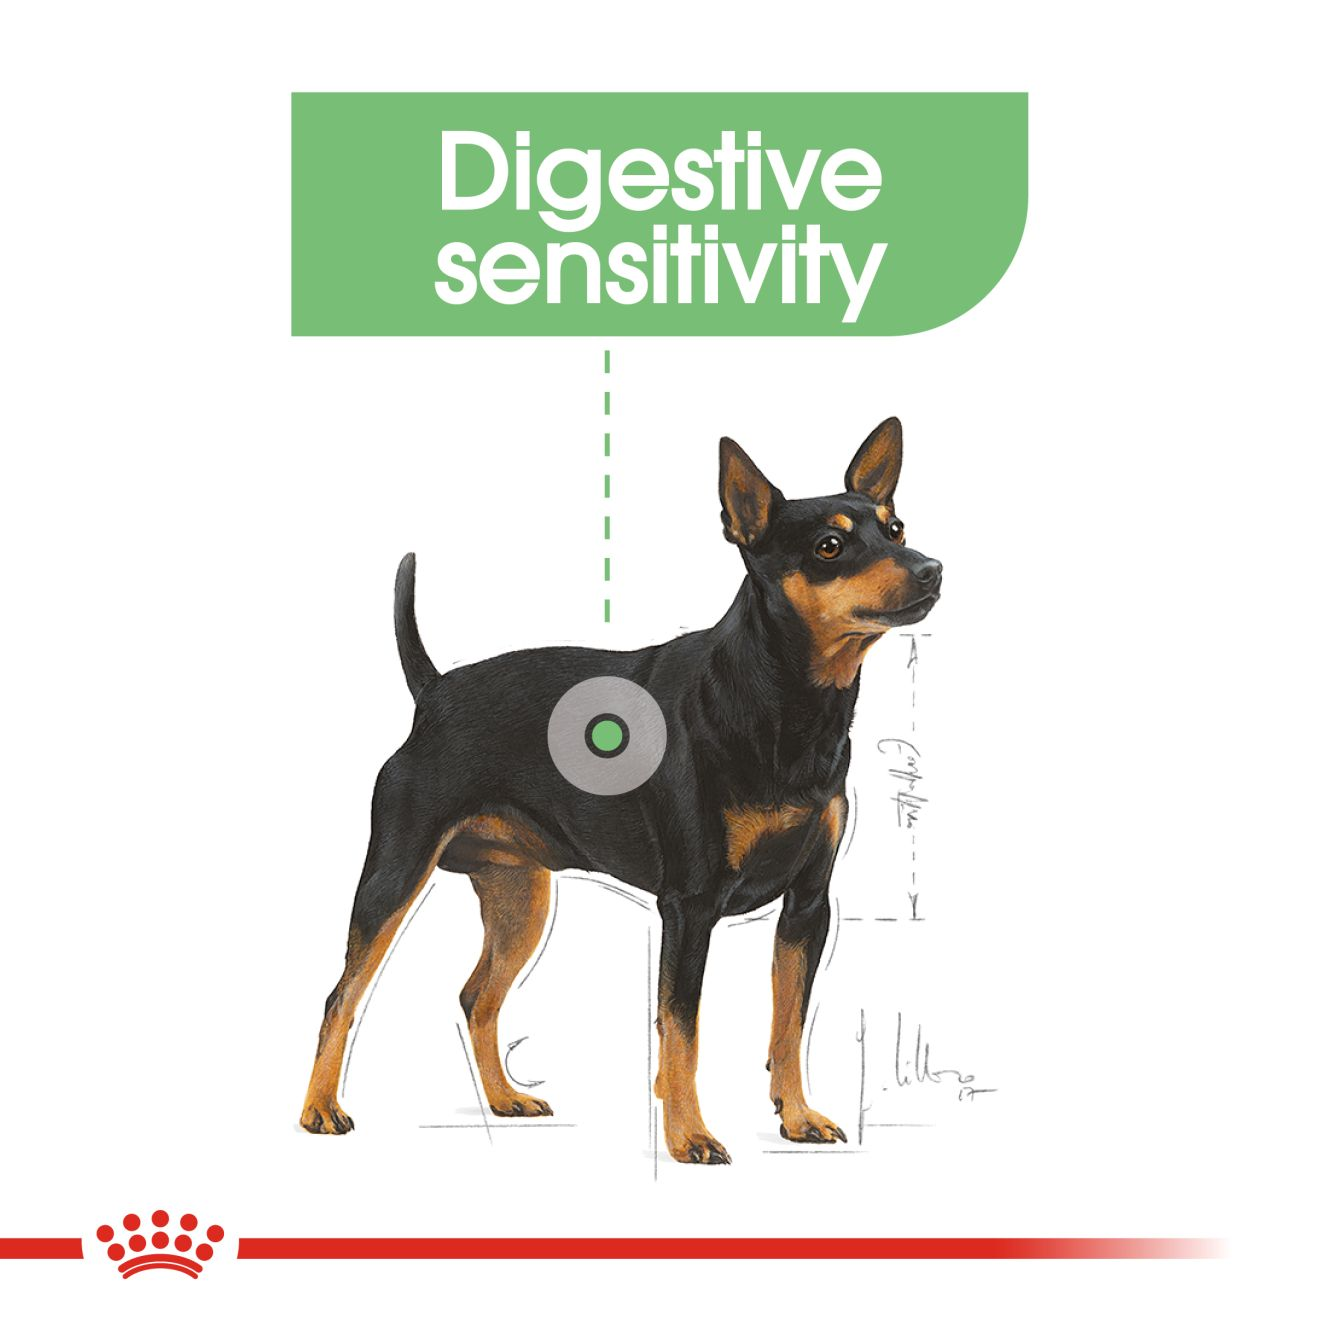 ROYAL CANIN Digestive Care ADULT DOG WET food